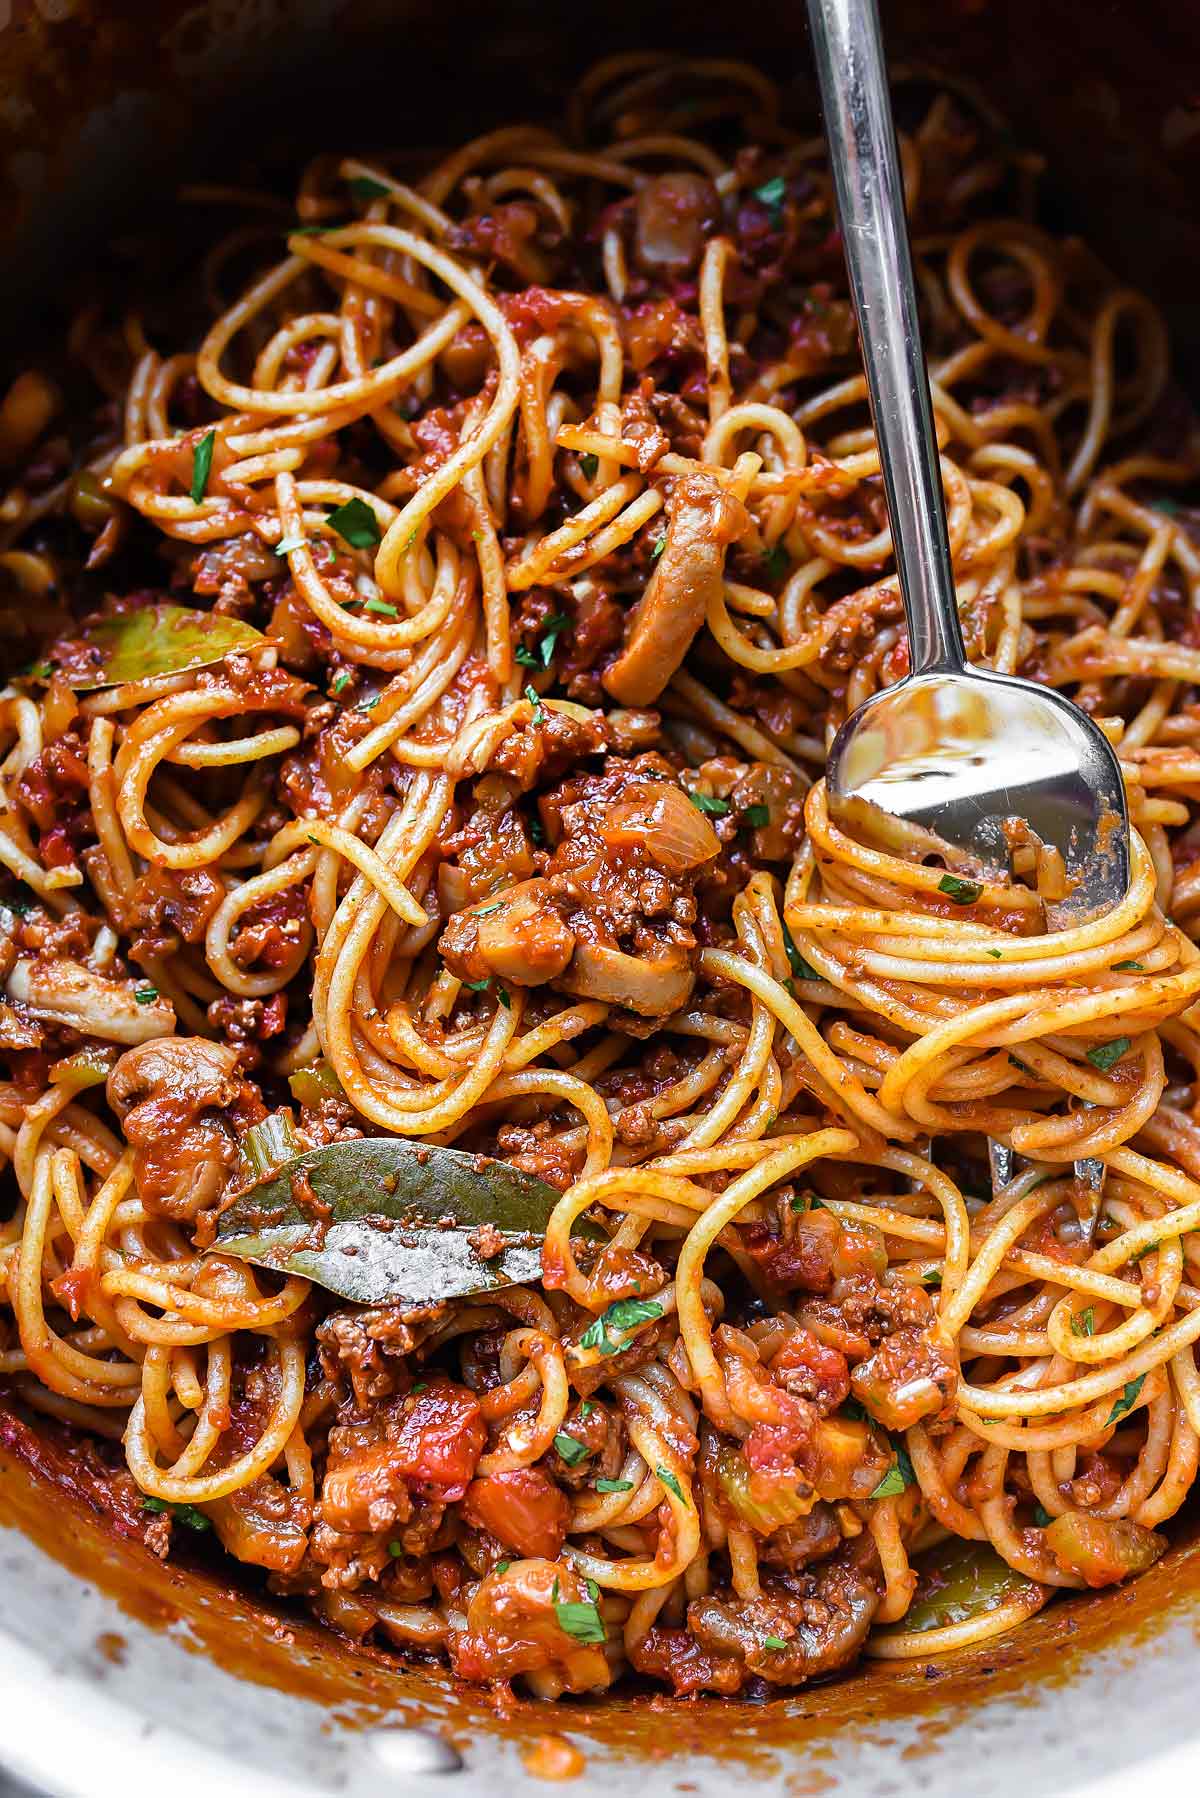 Recette de spaghetti maison de ma mère avec sauce à la viande | foodiecrush.com #spaghetti #viande #sauce #bolognaise #pasta #recipe